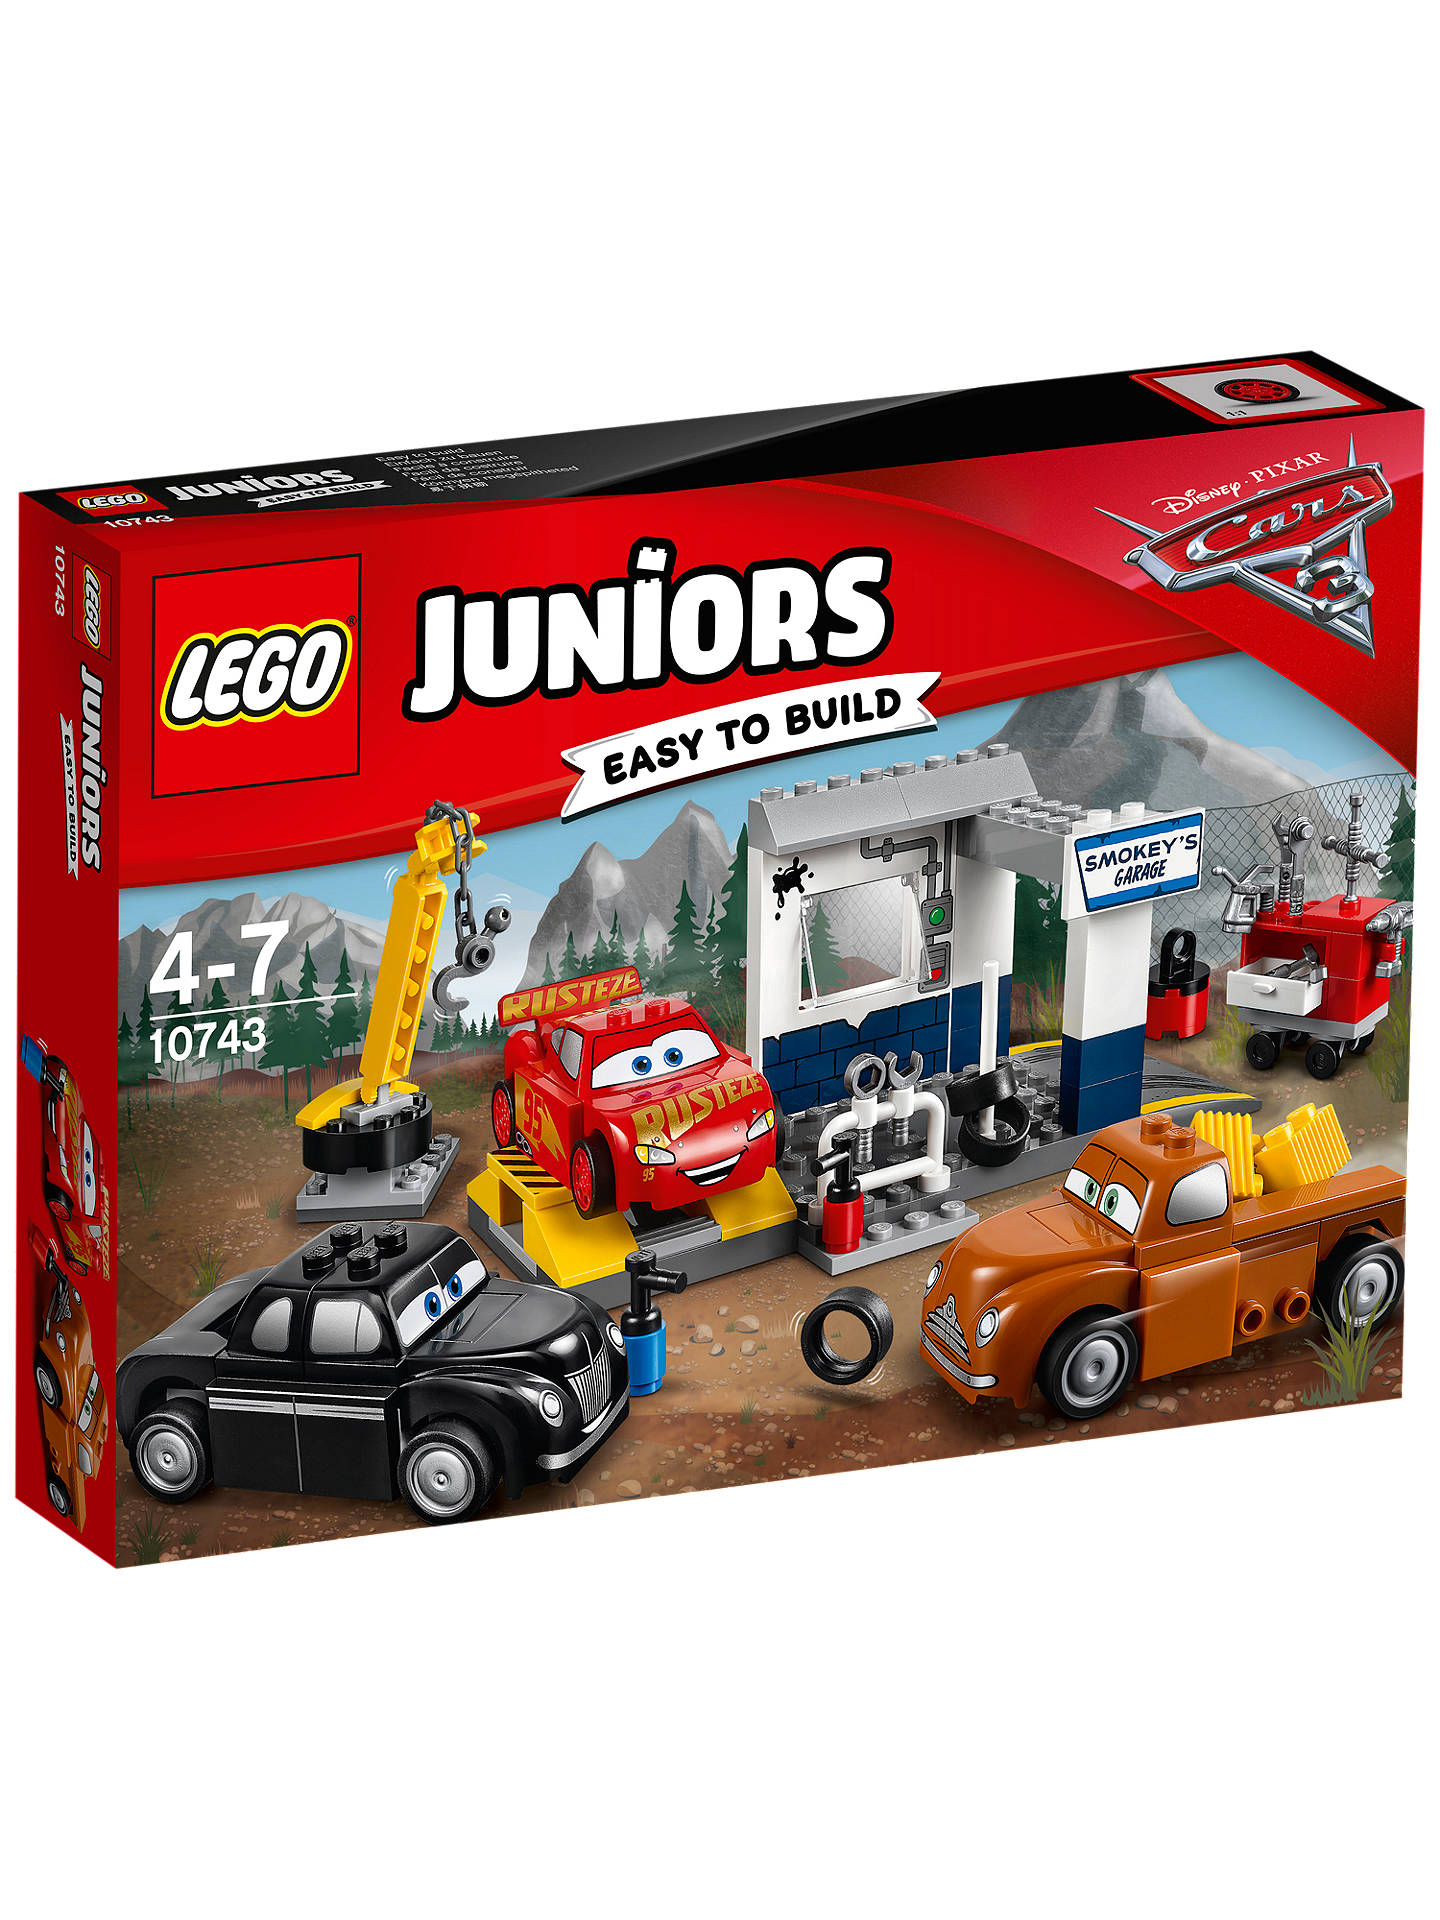 LEGO Juniors Disney Pixar Cars 3 10743 Smokey's Garage at